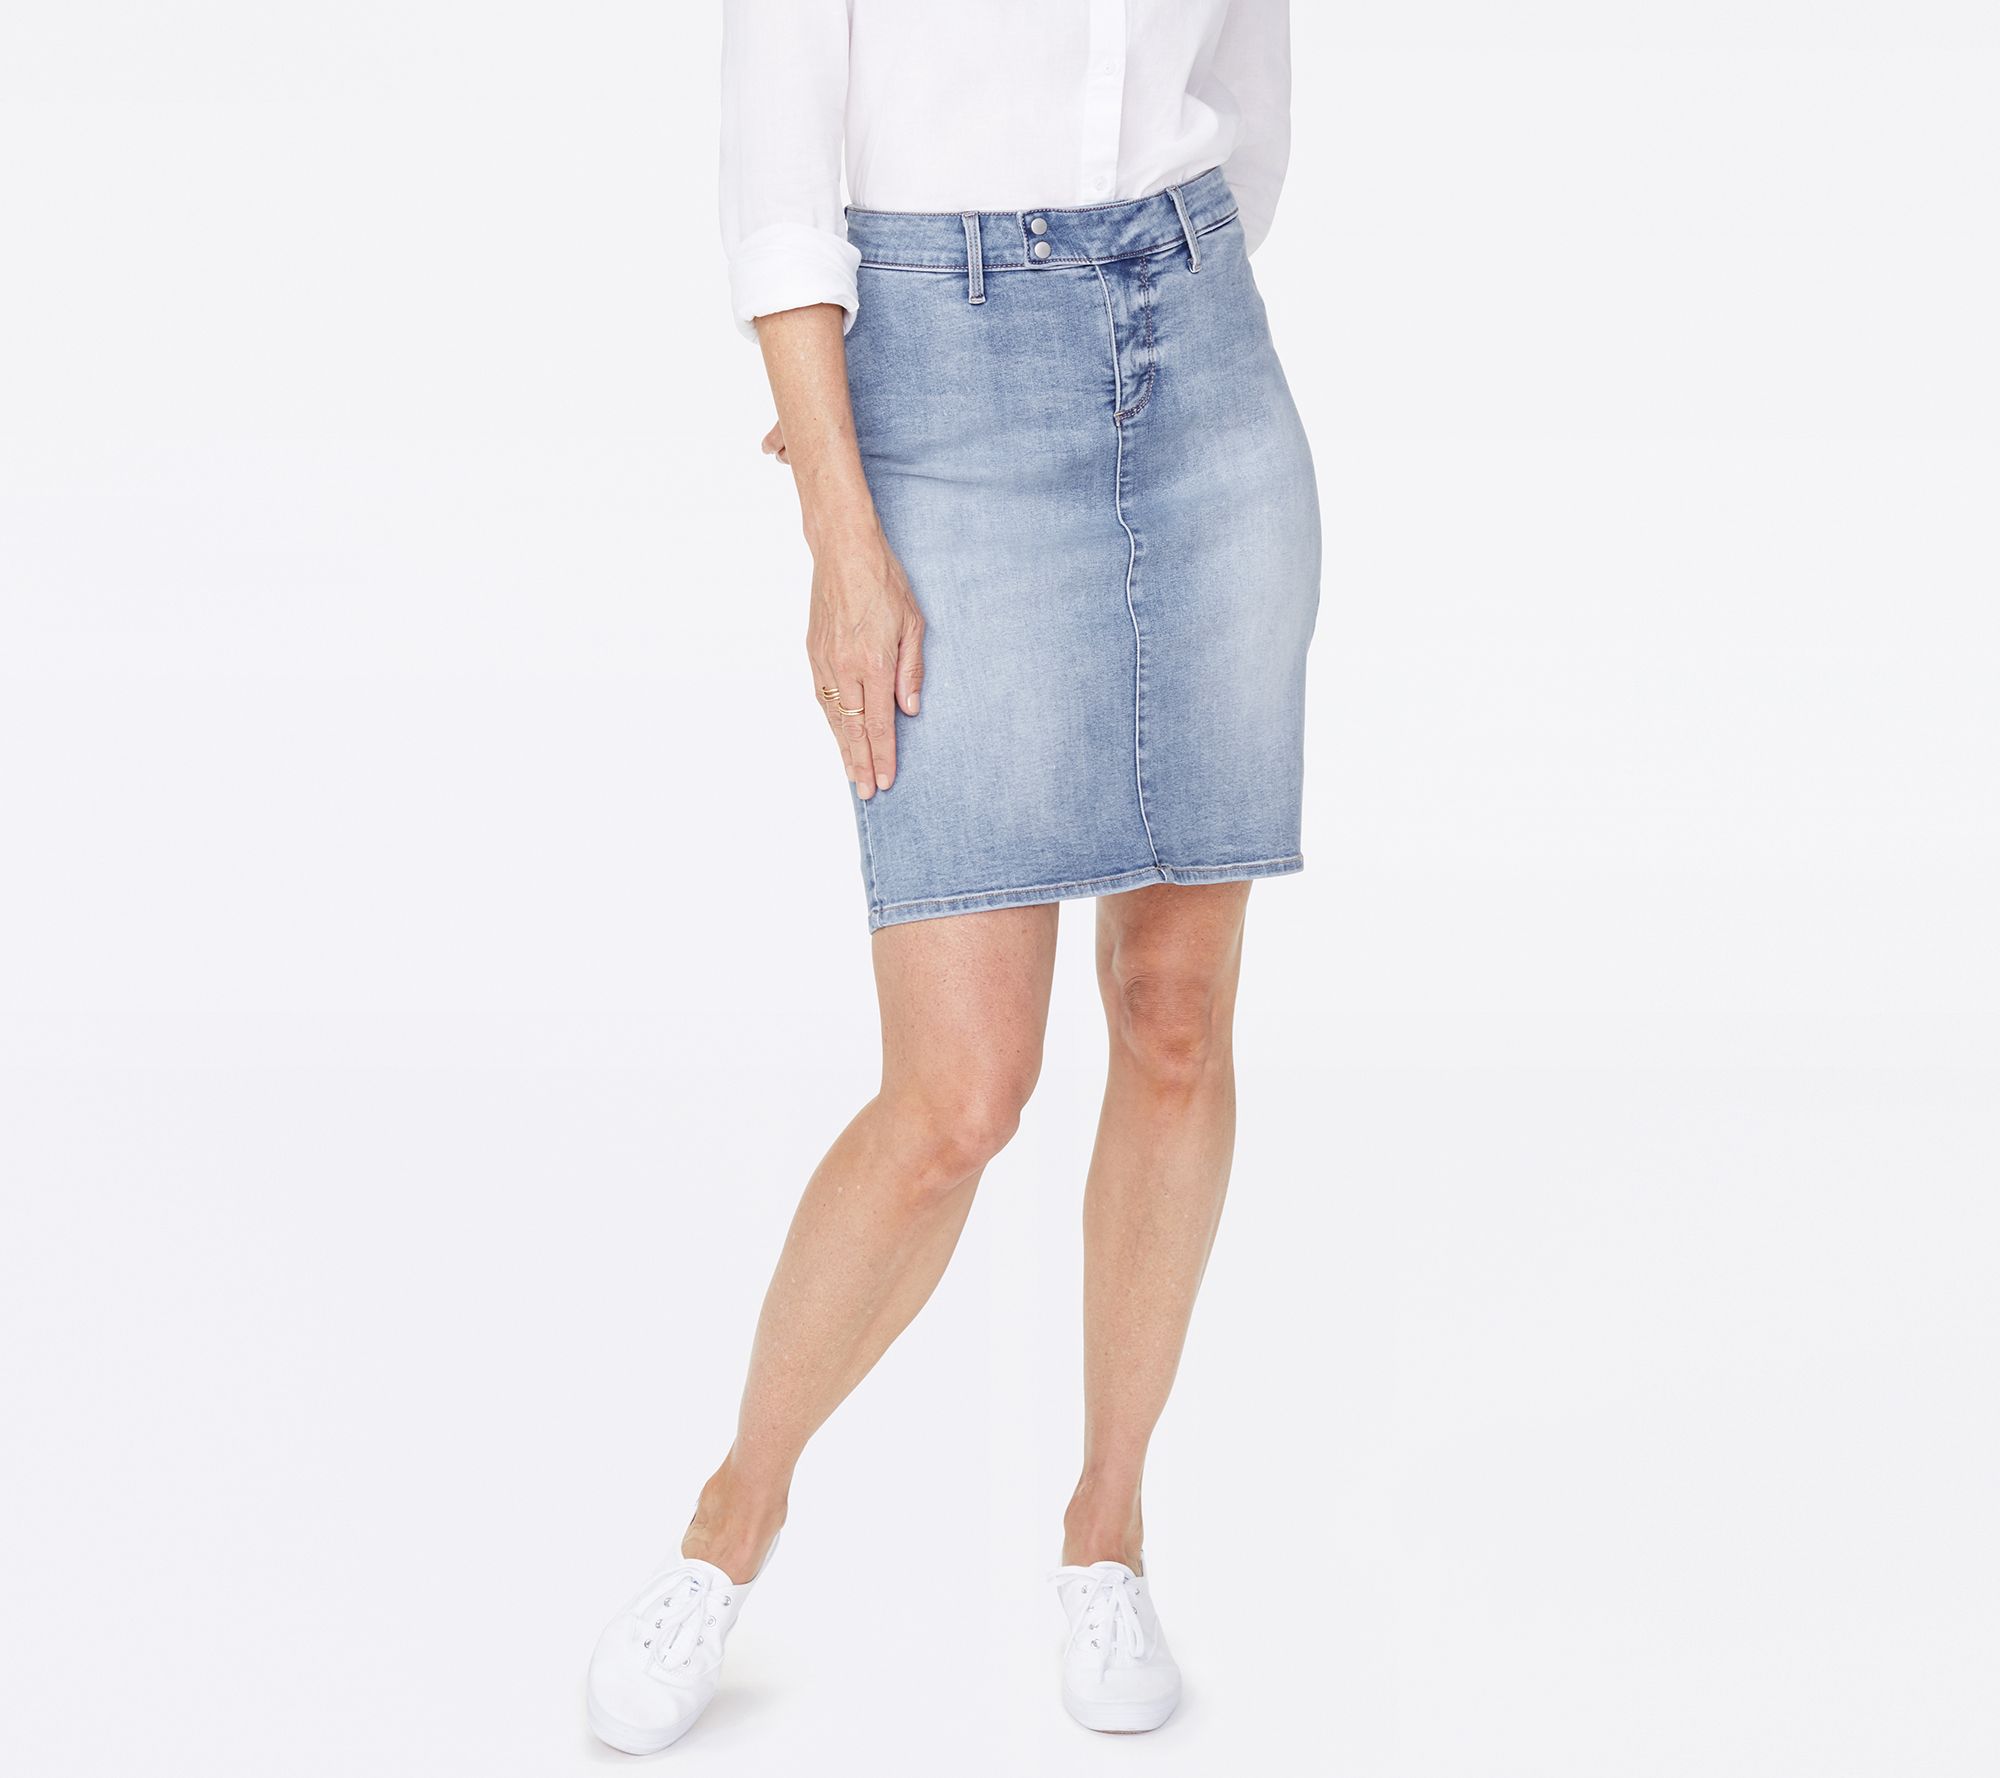 NYDJ Denim Skirt with Double Snap Waistband - QVC.com